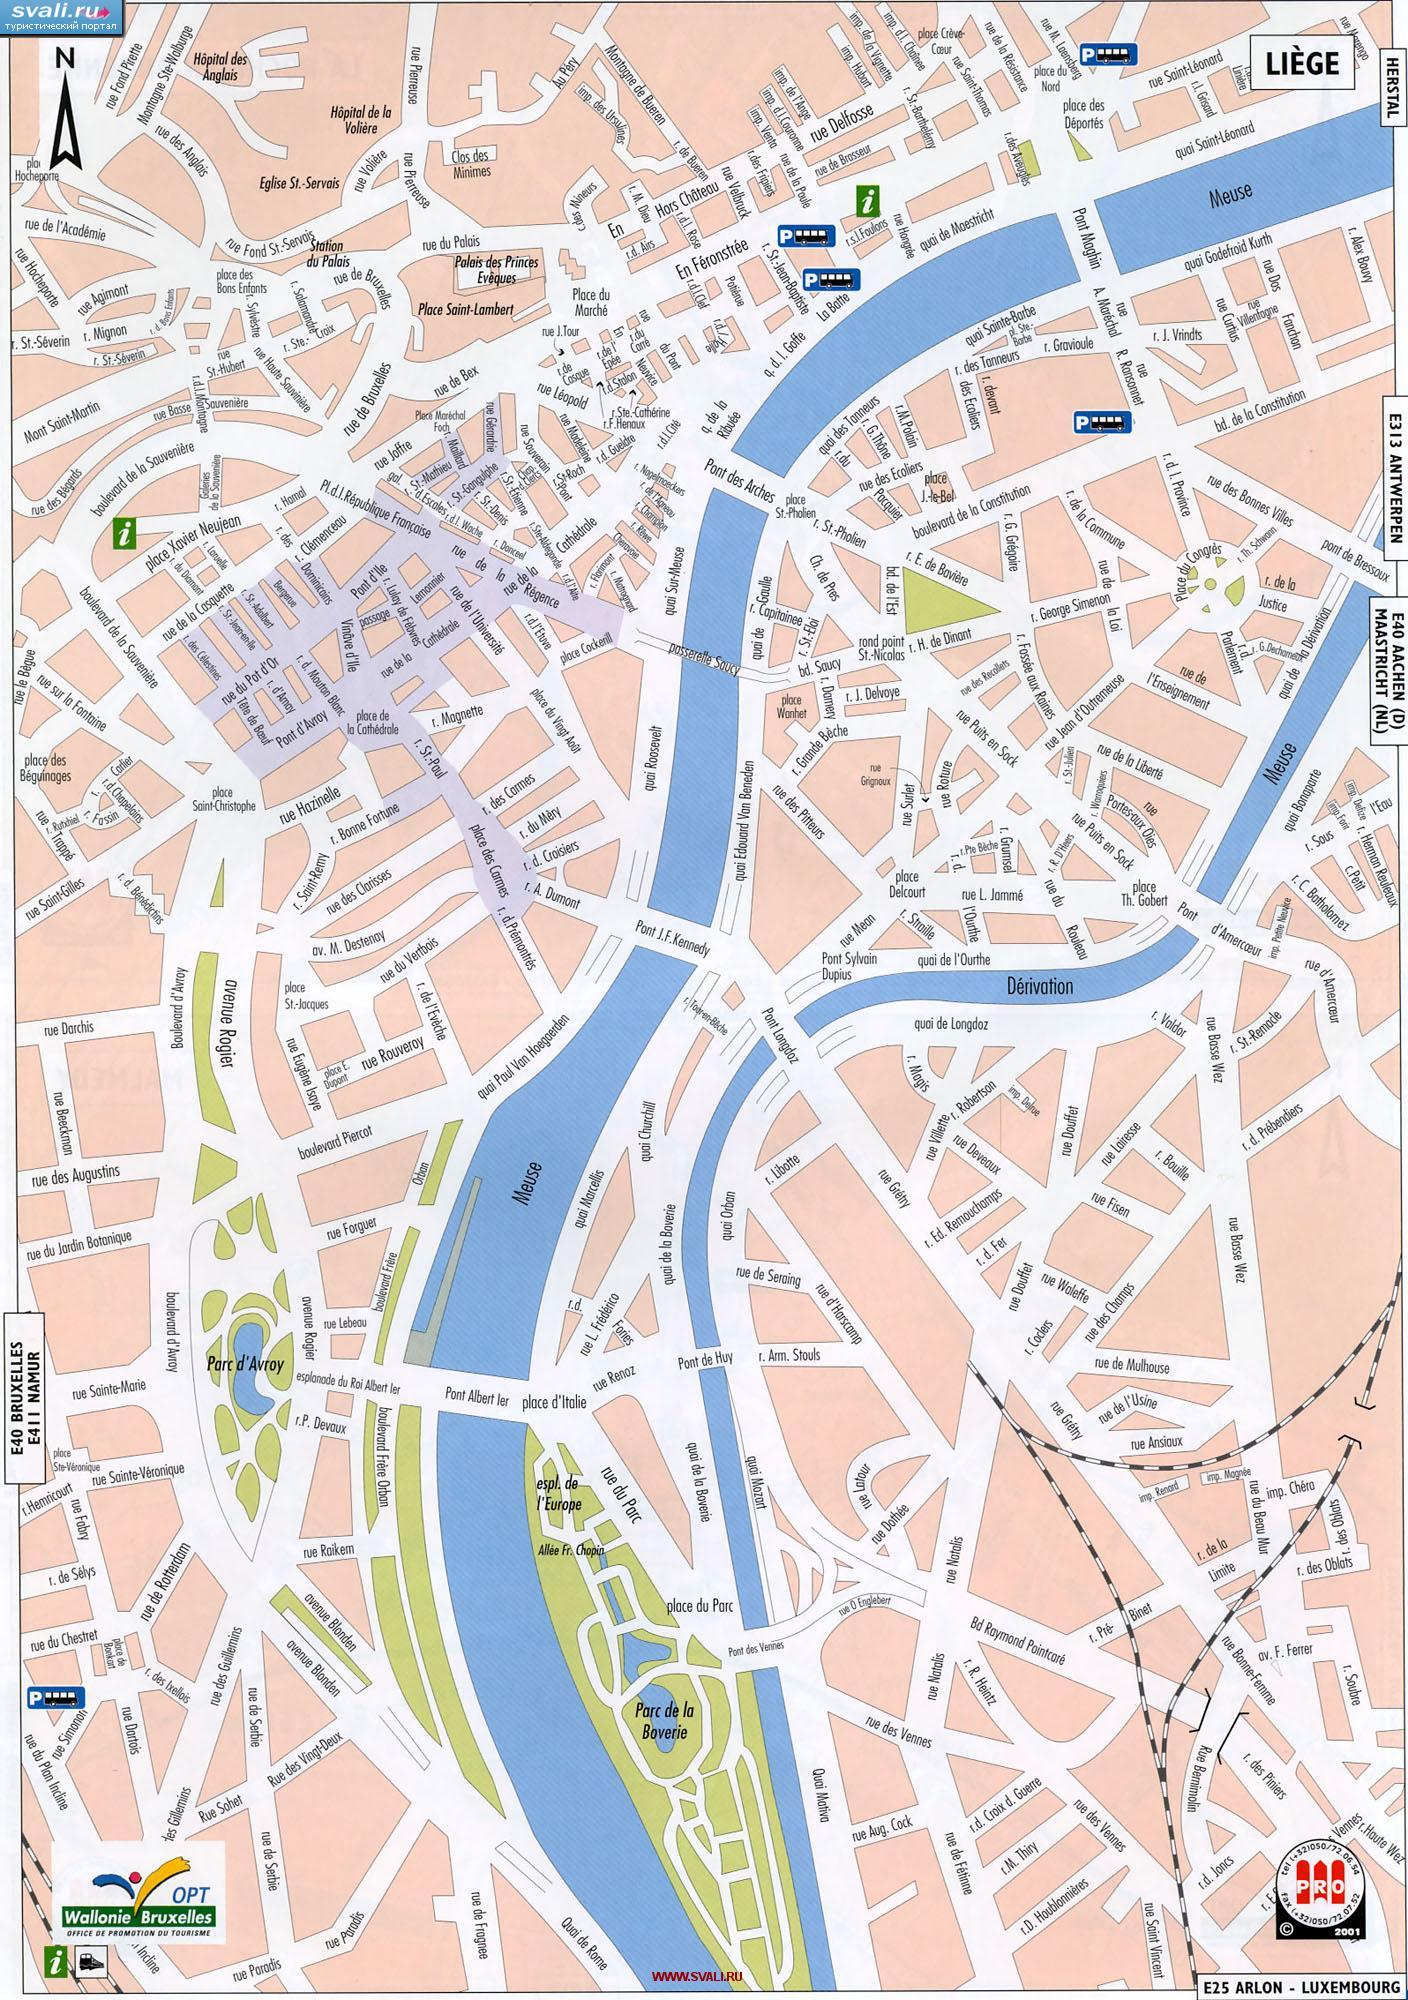 Подробная карта центра Льежа, Бельгия (фр.)